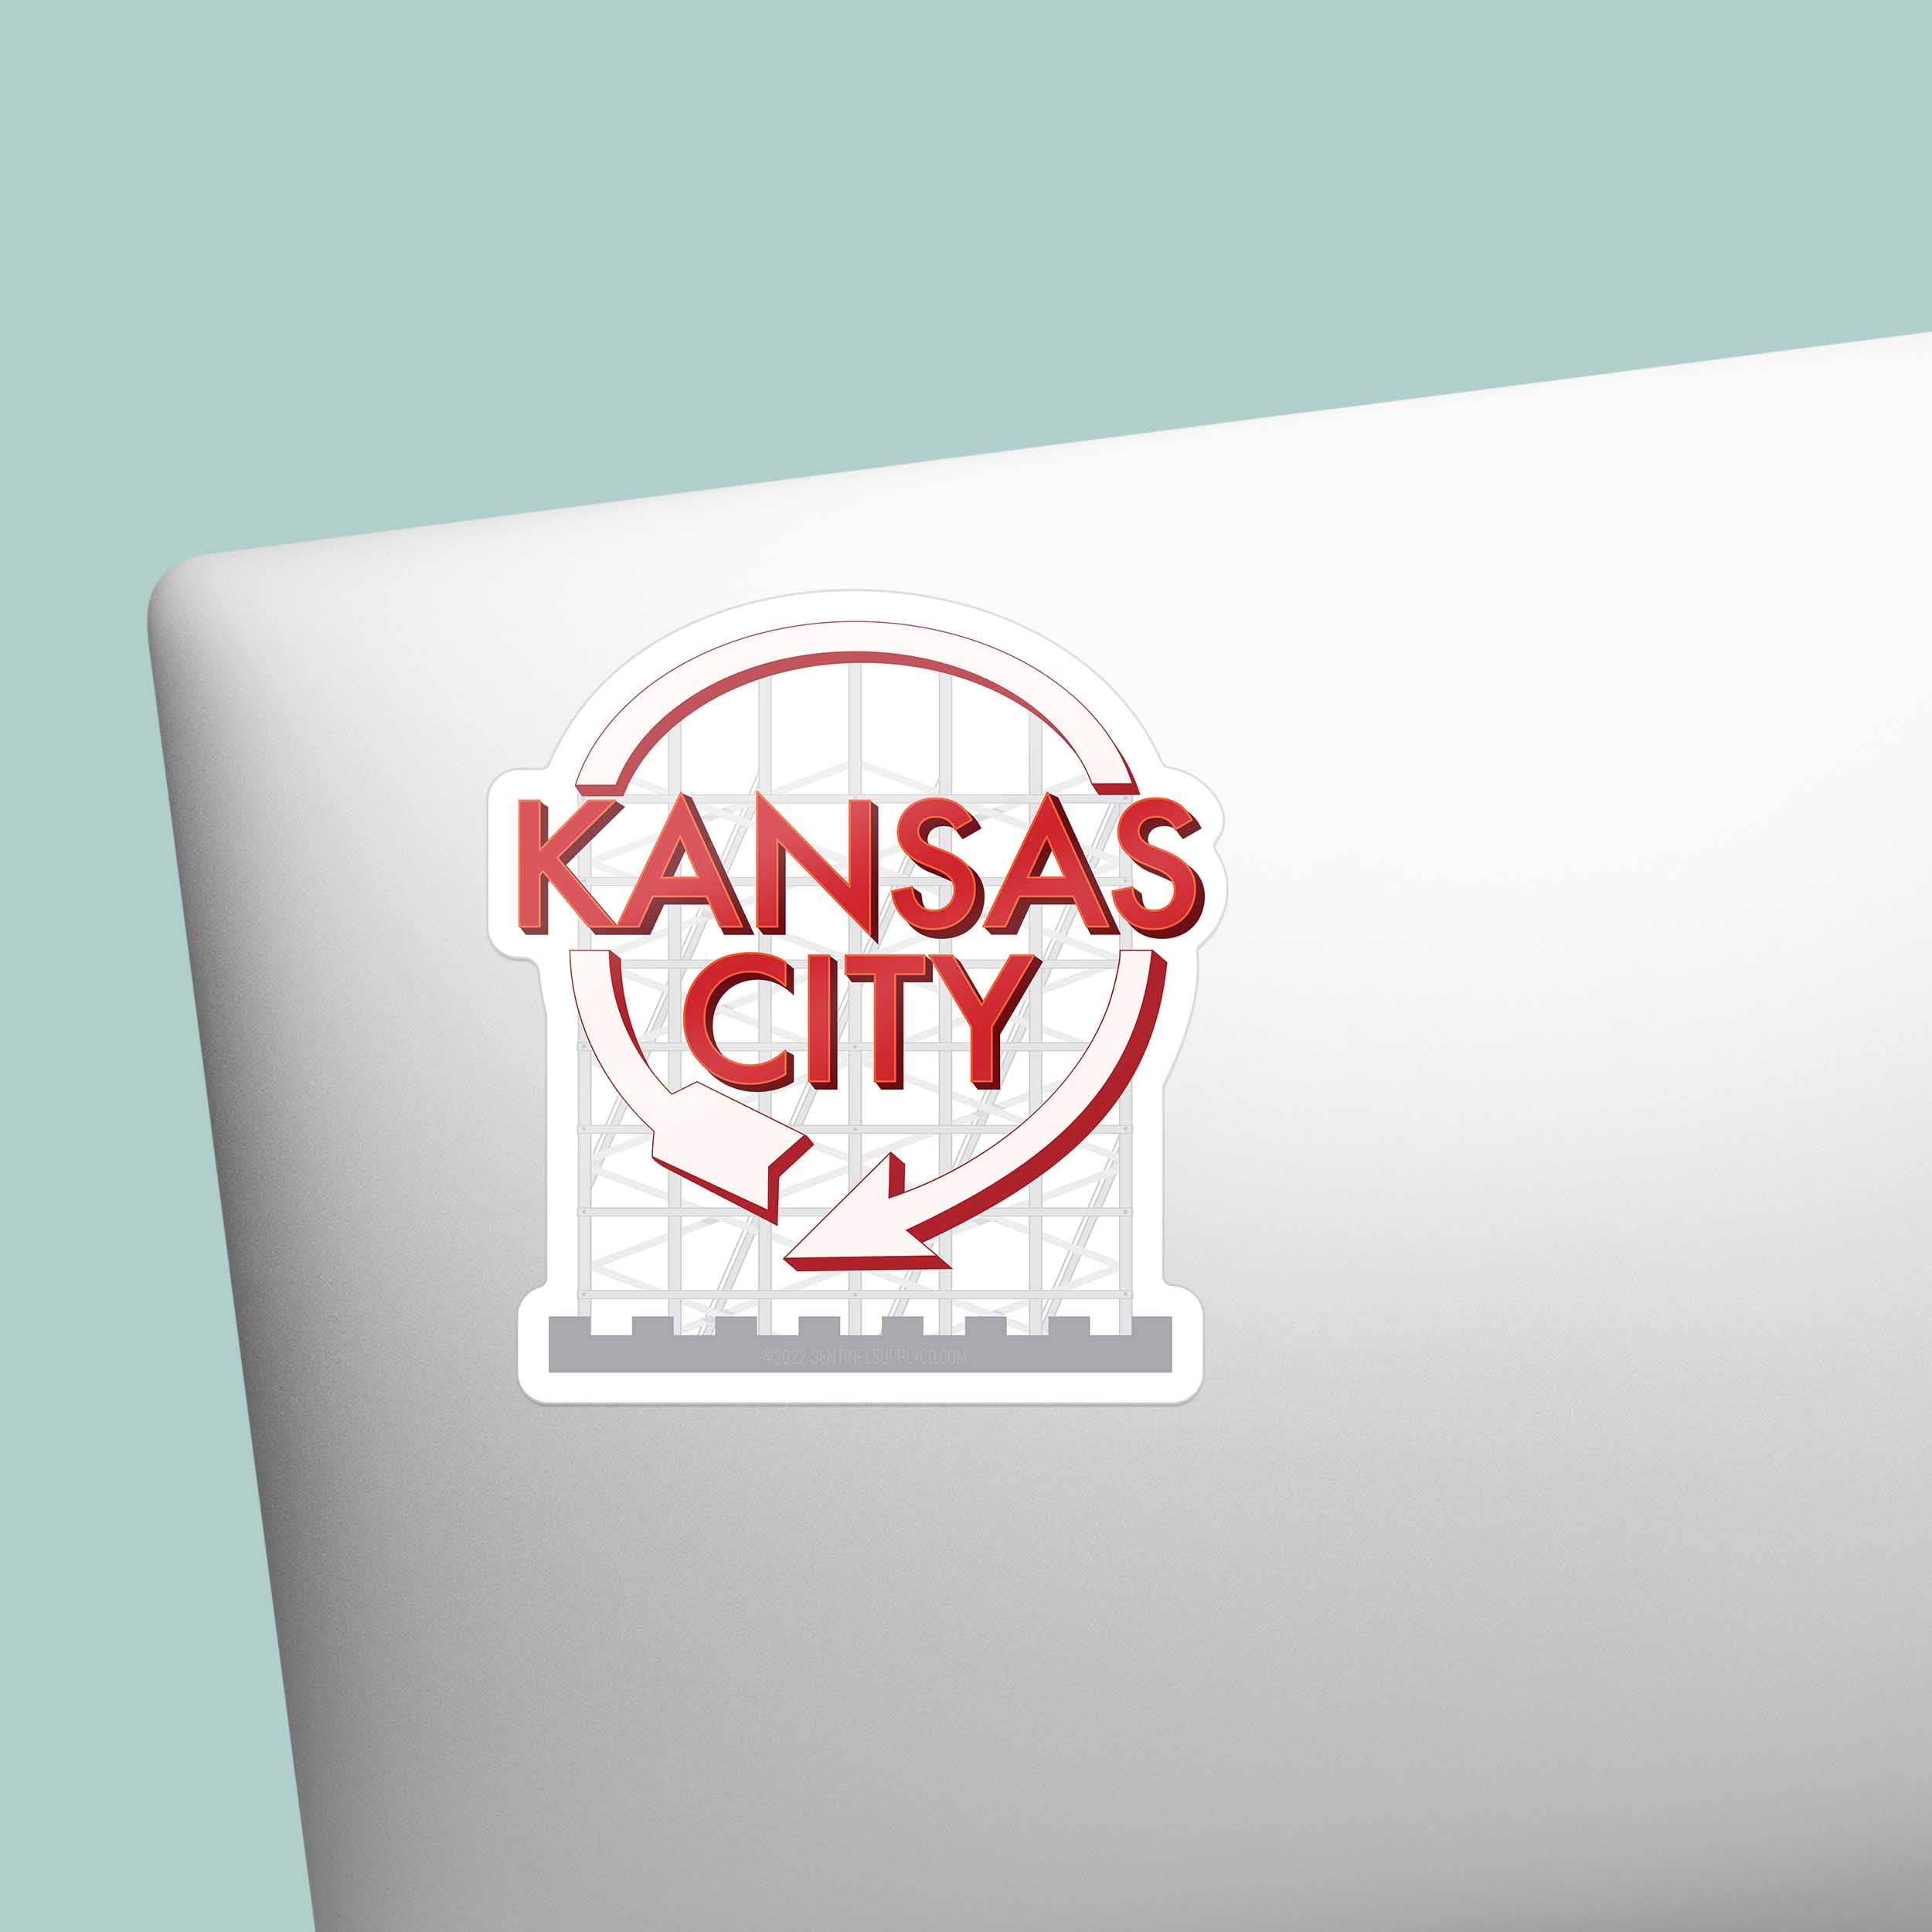 Kansas City Missouri Bumper Sticker for Car, Cute Kansas City Skyline Sign Sticker for Hydroflask, KCMO Decal for Tumbler